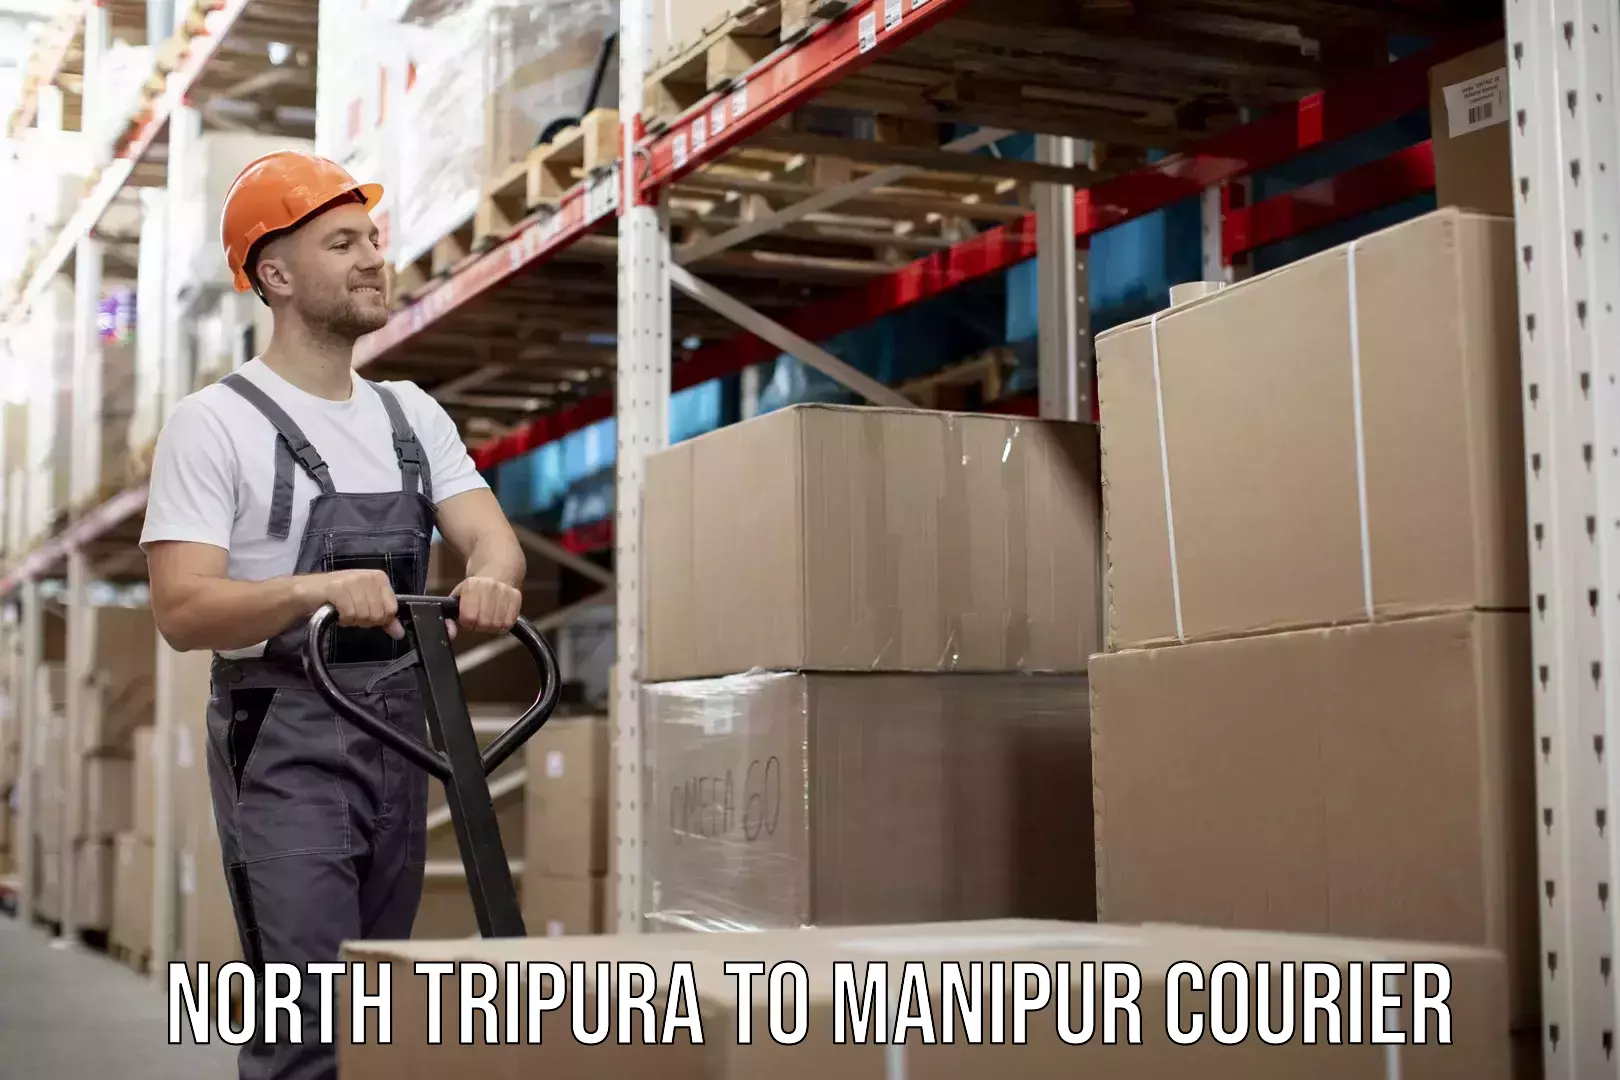 Quick dispatch service North Tripura to Manipur